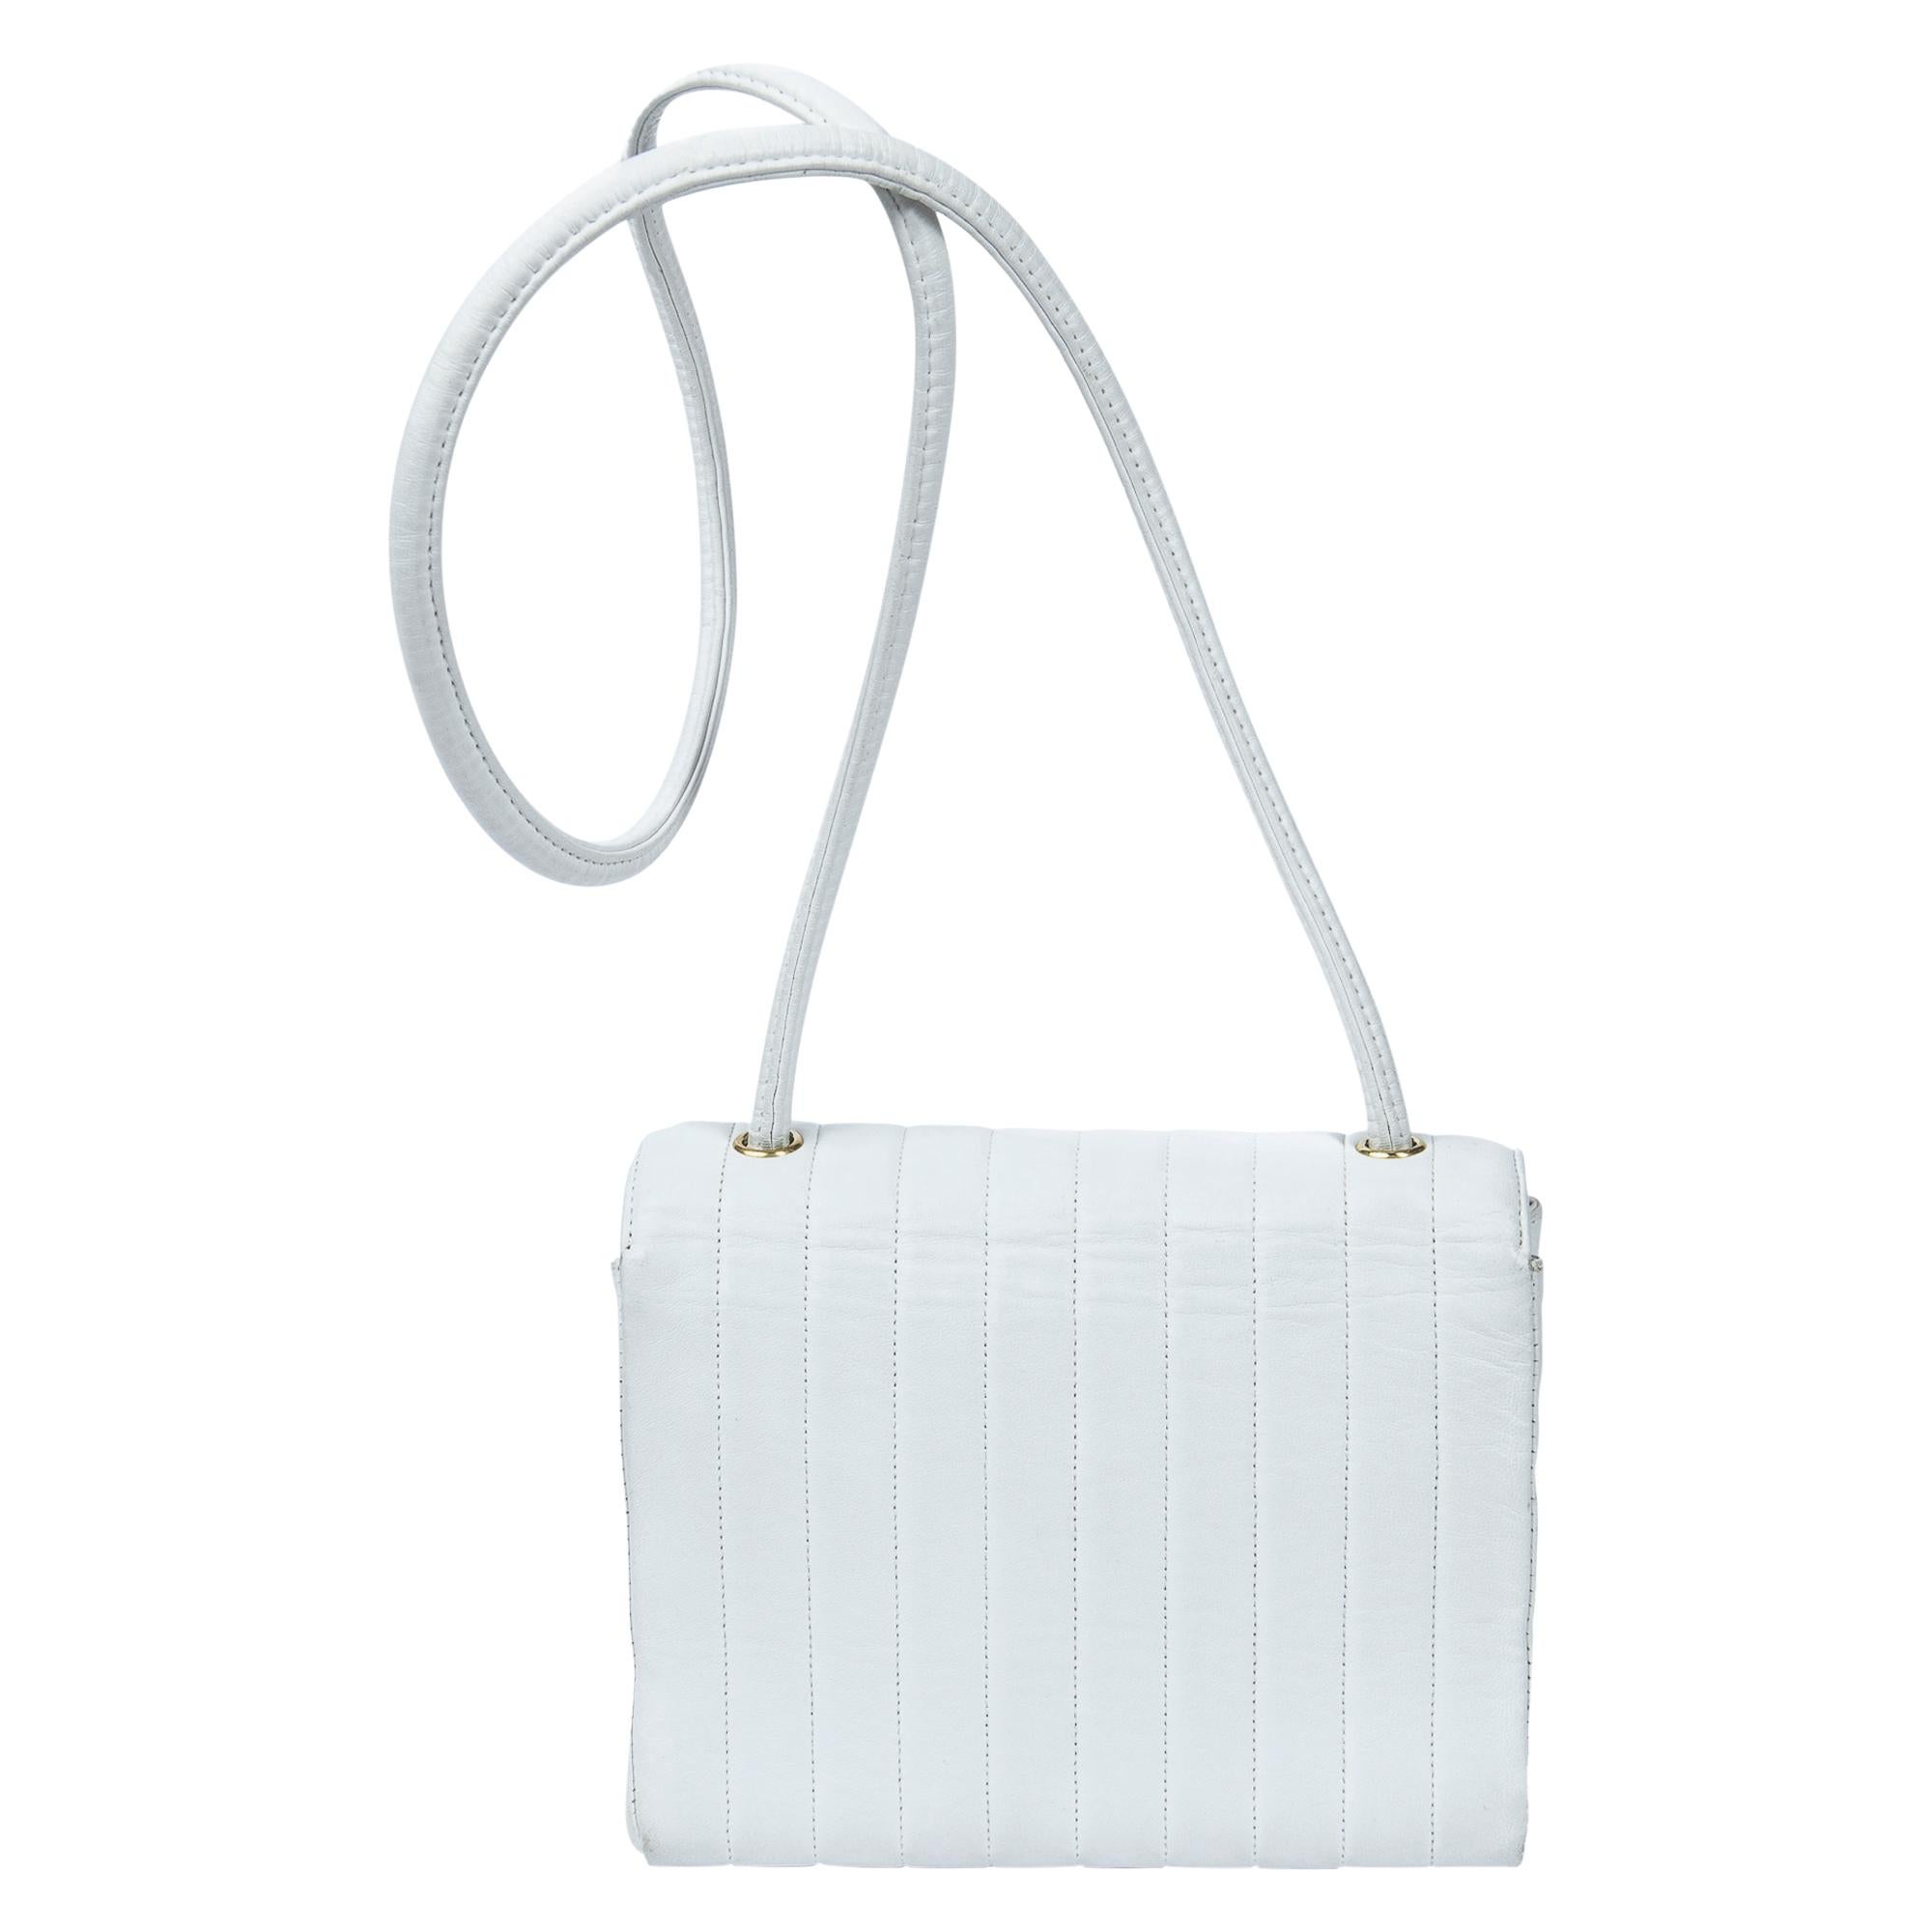 Chanel 1991 White Striated CC Turnlock Flap Bag In Good Condition For Sale In Atlanta, GA